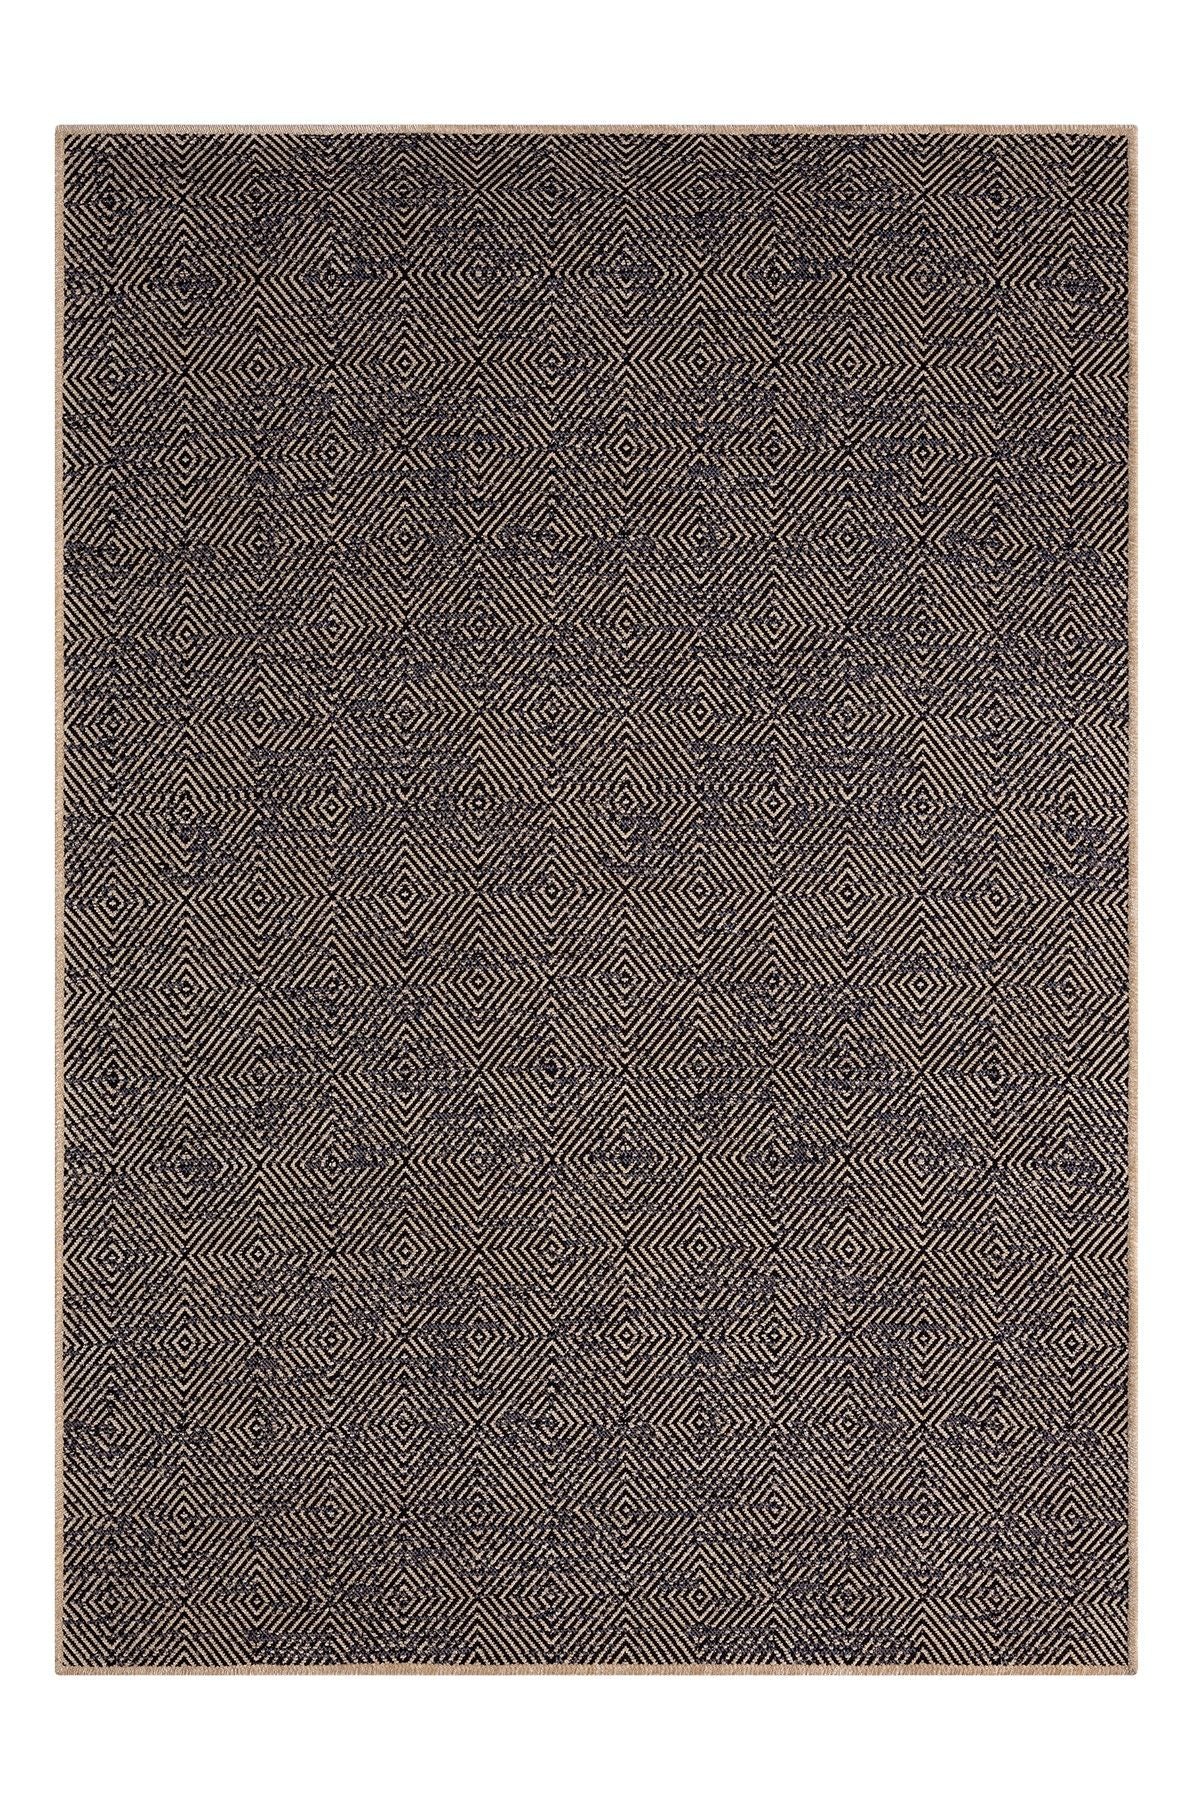 Terapia 3504 - Carpet (160 x 230)